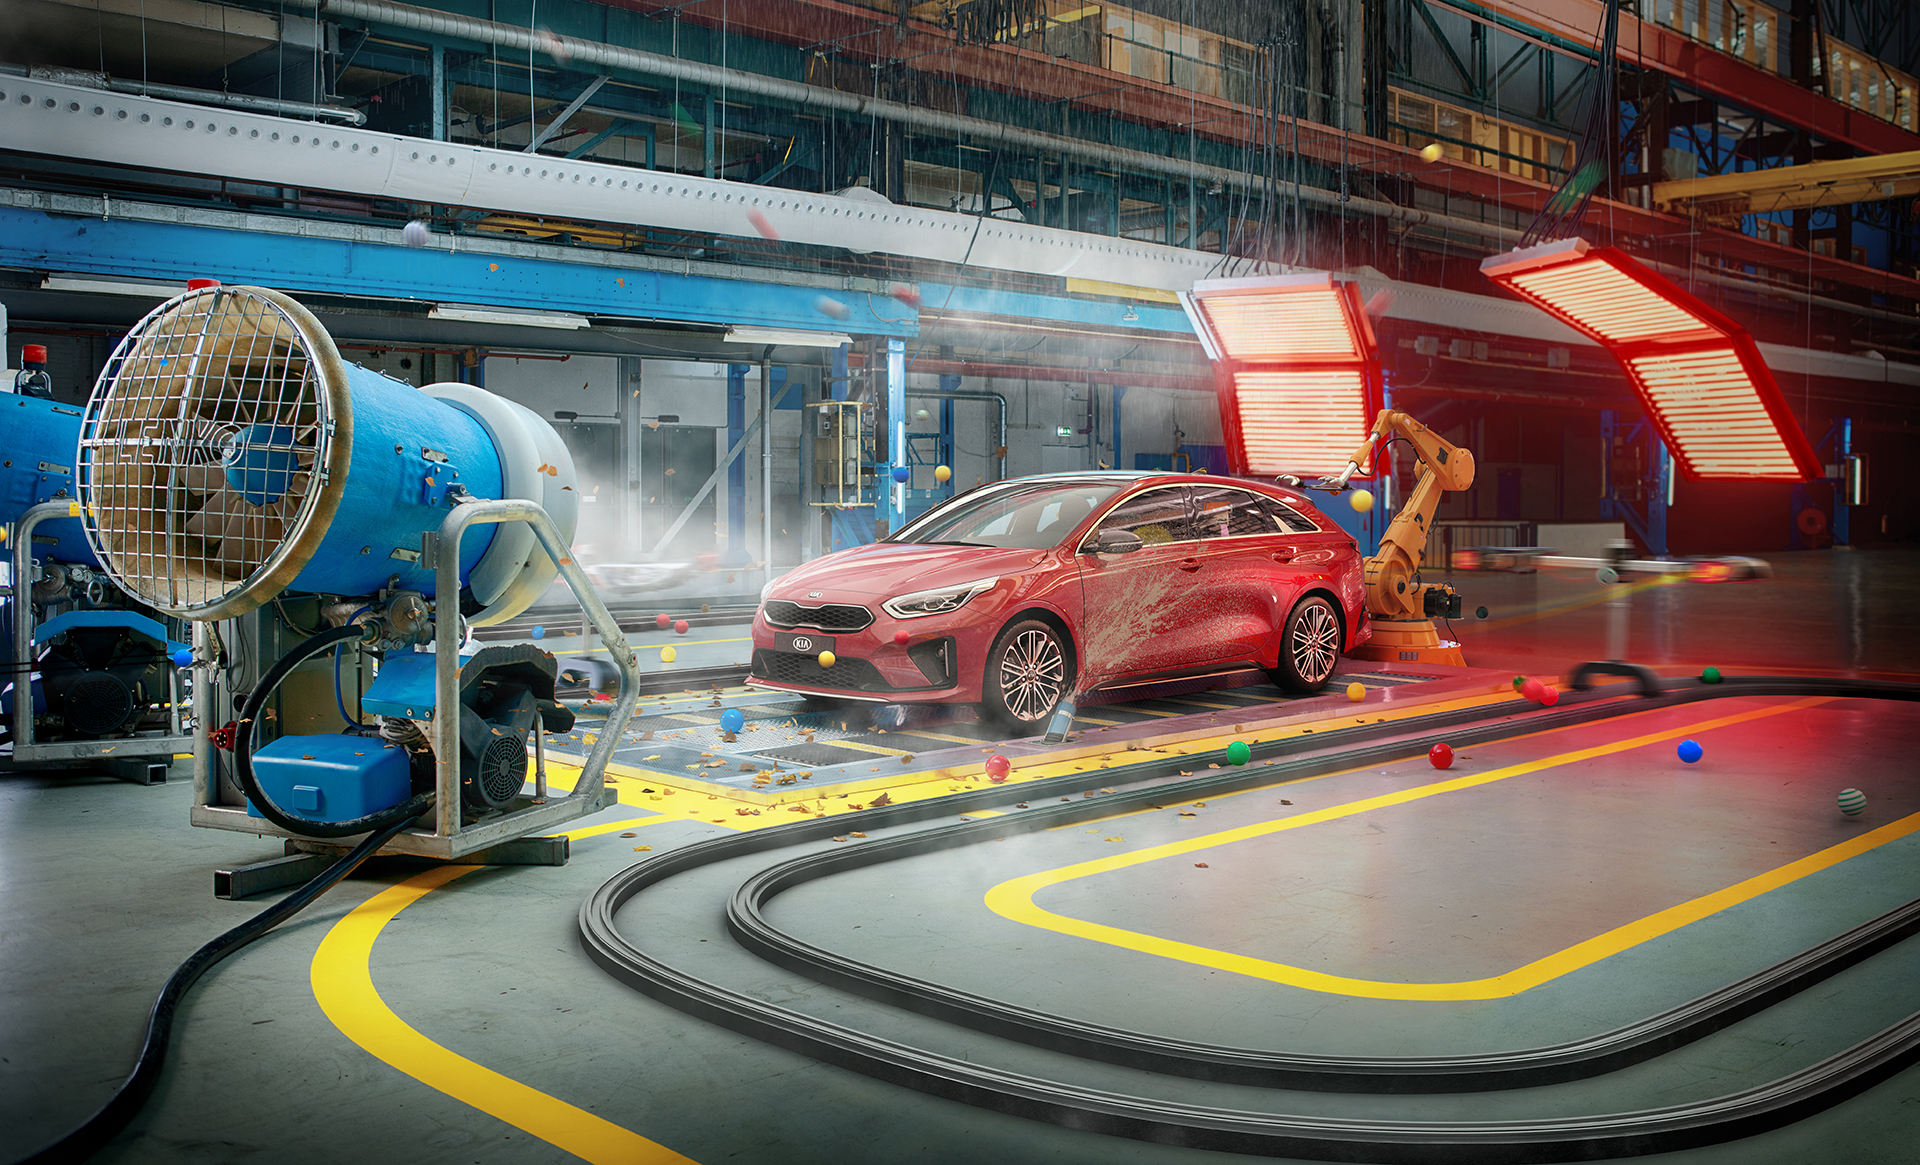 Kia Motors Visualises Its 7 Year Guarantee in 7 Seconds